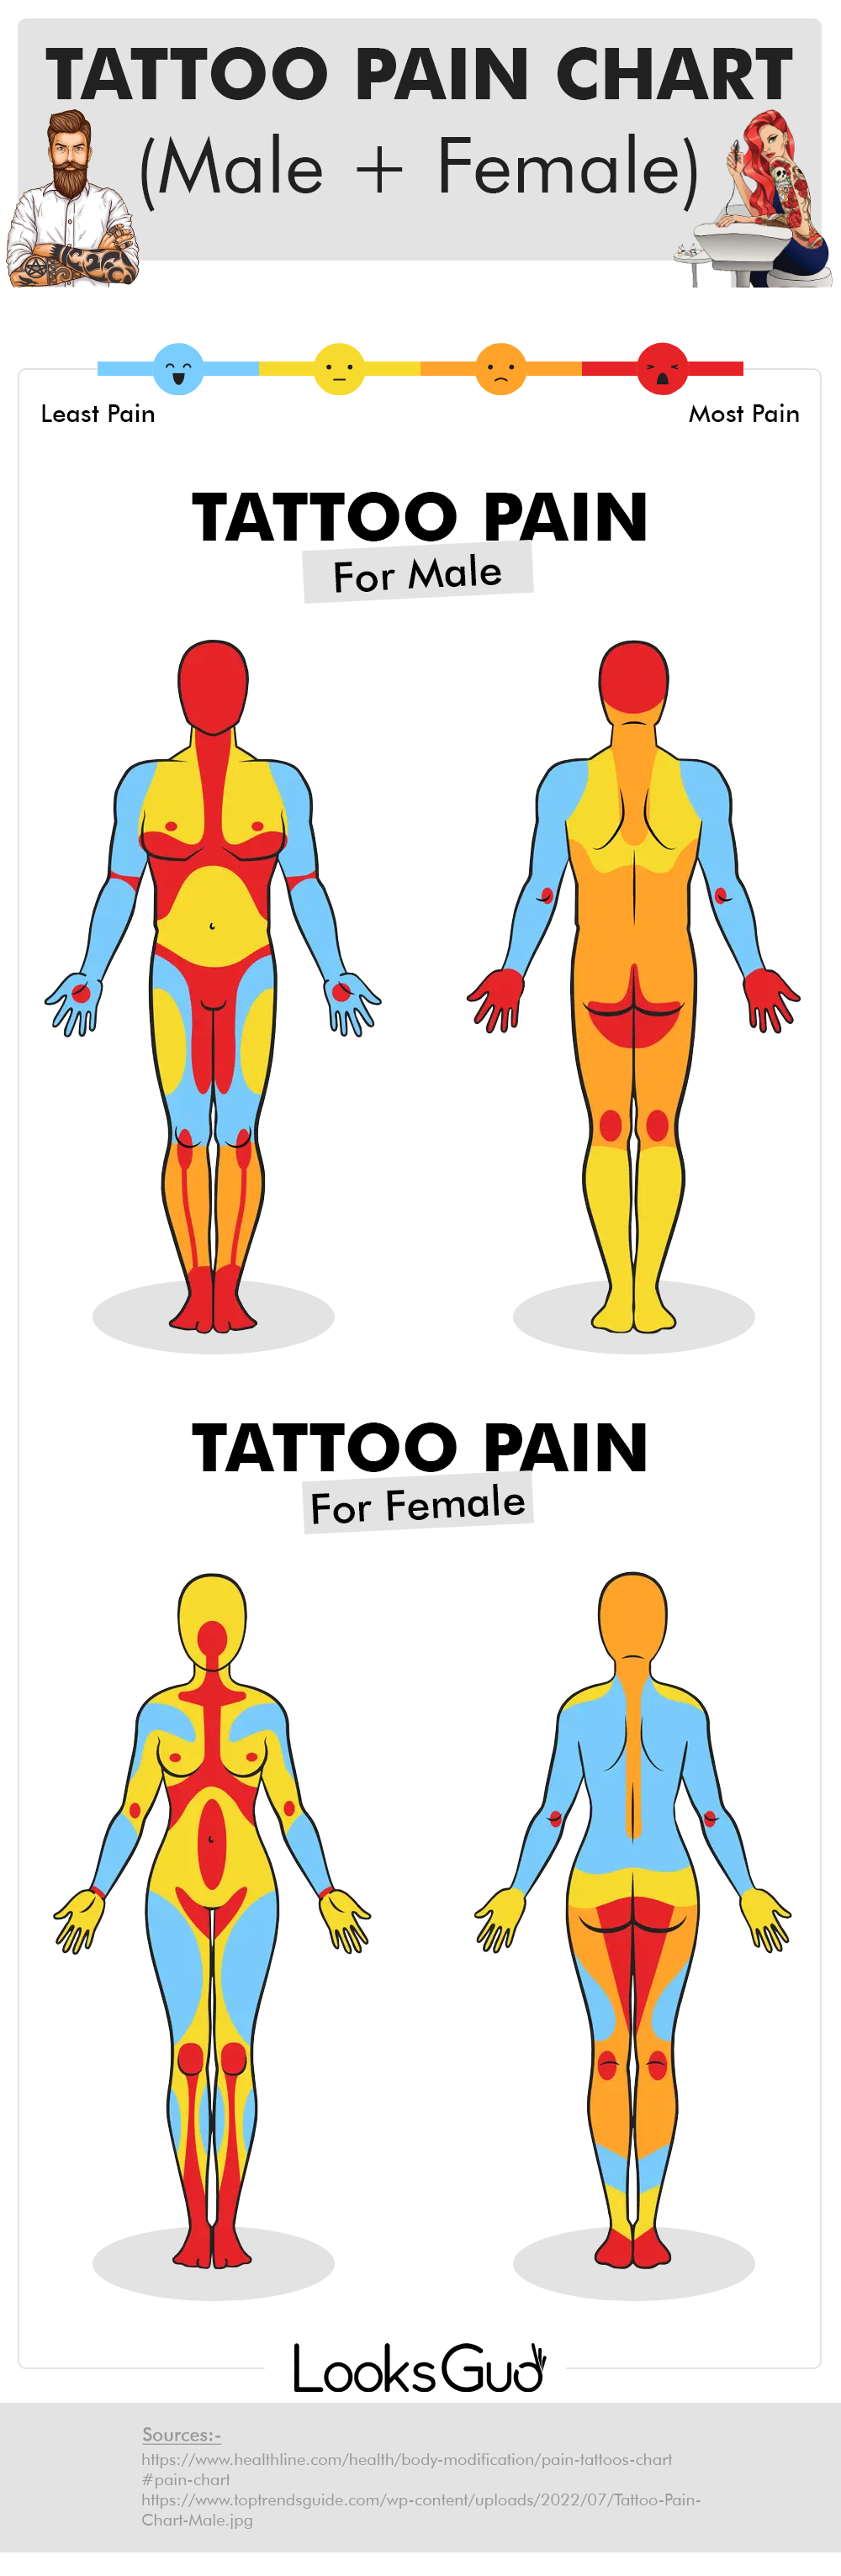 Tattoo Pain Chart: Scale of Pain Explained (Female + Male) - LooksGud.com